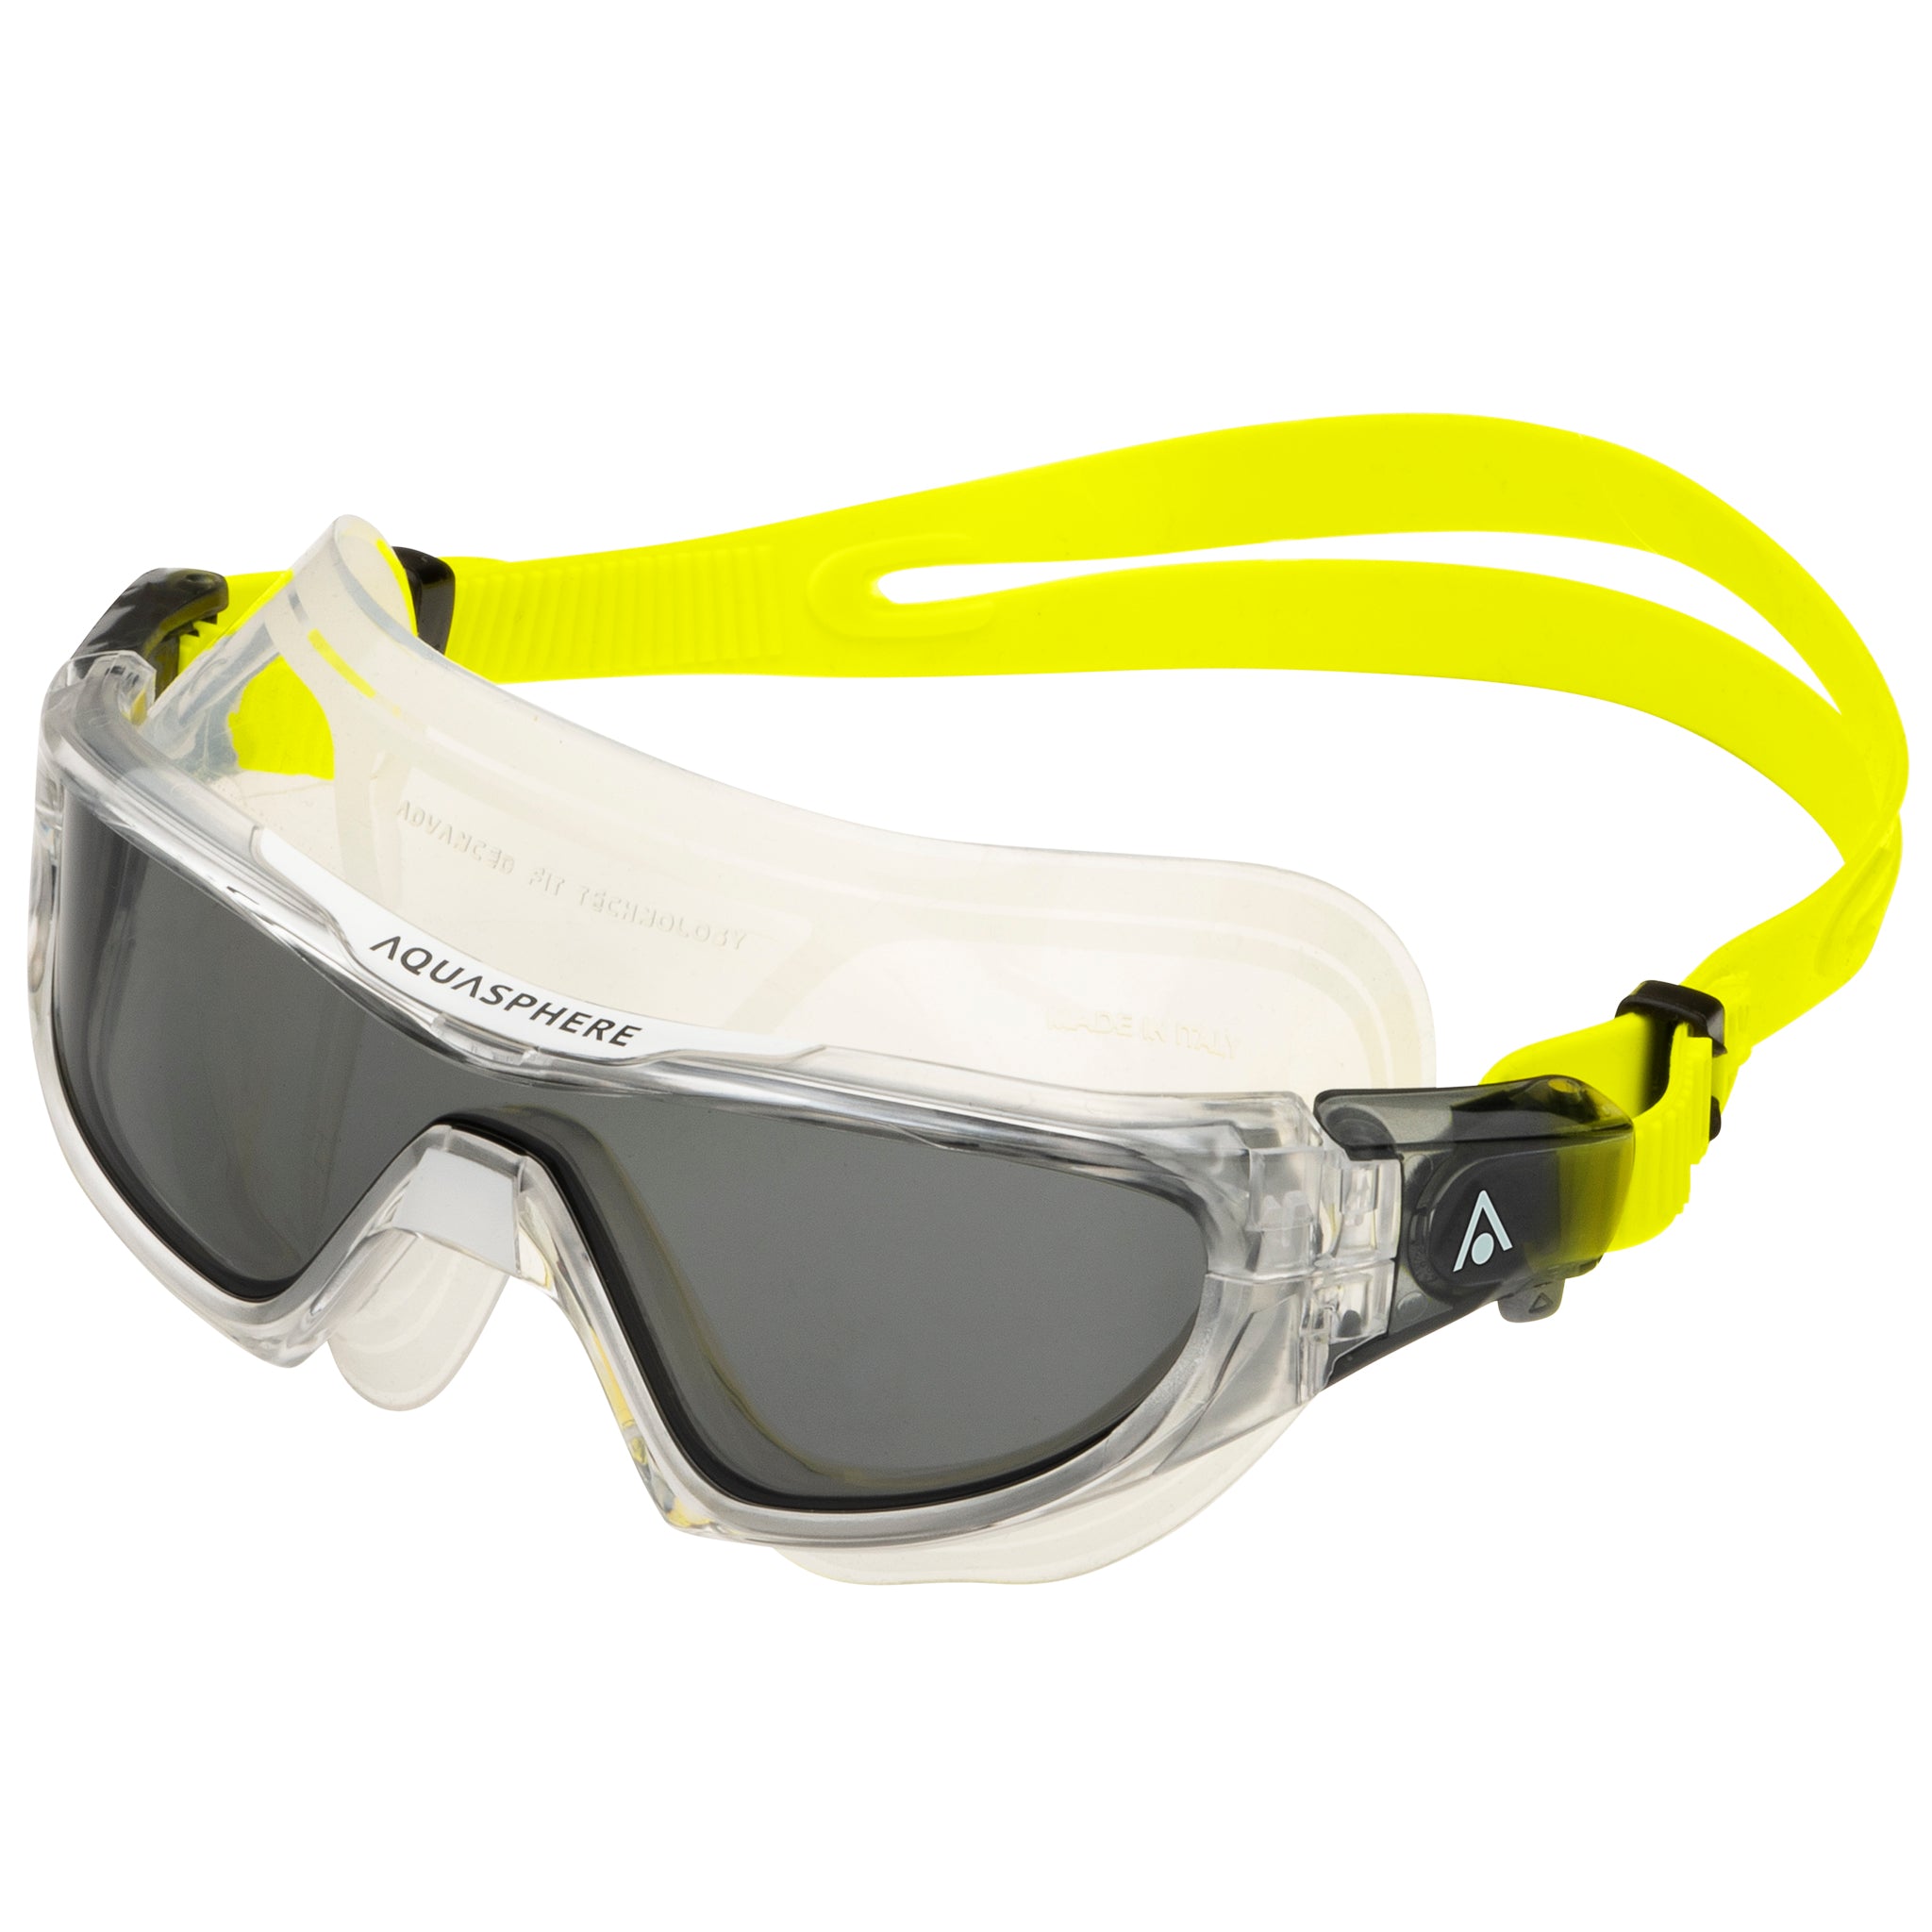 Aquasphere Vista Pro Swimming Goggles Mask Smoke Tinted Lens | Left